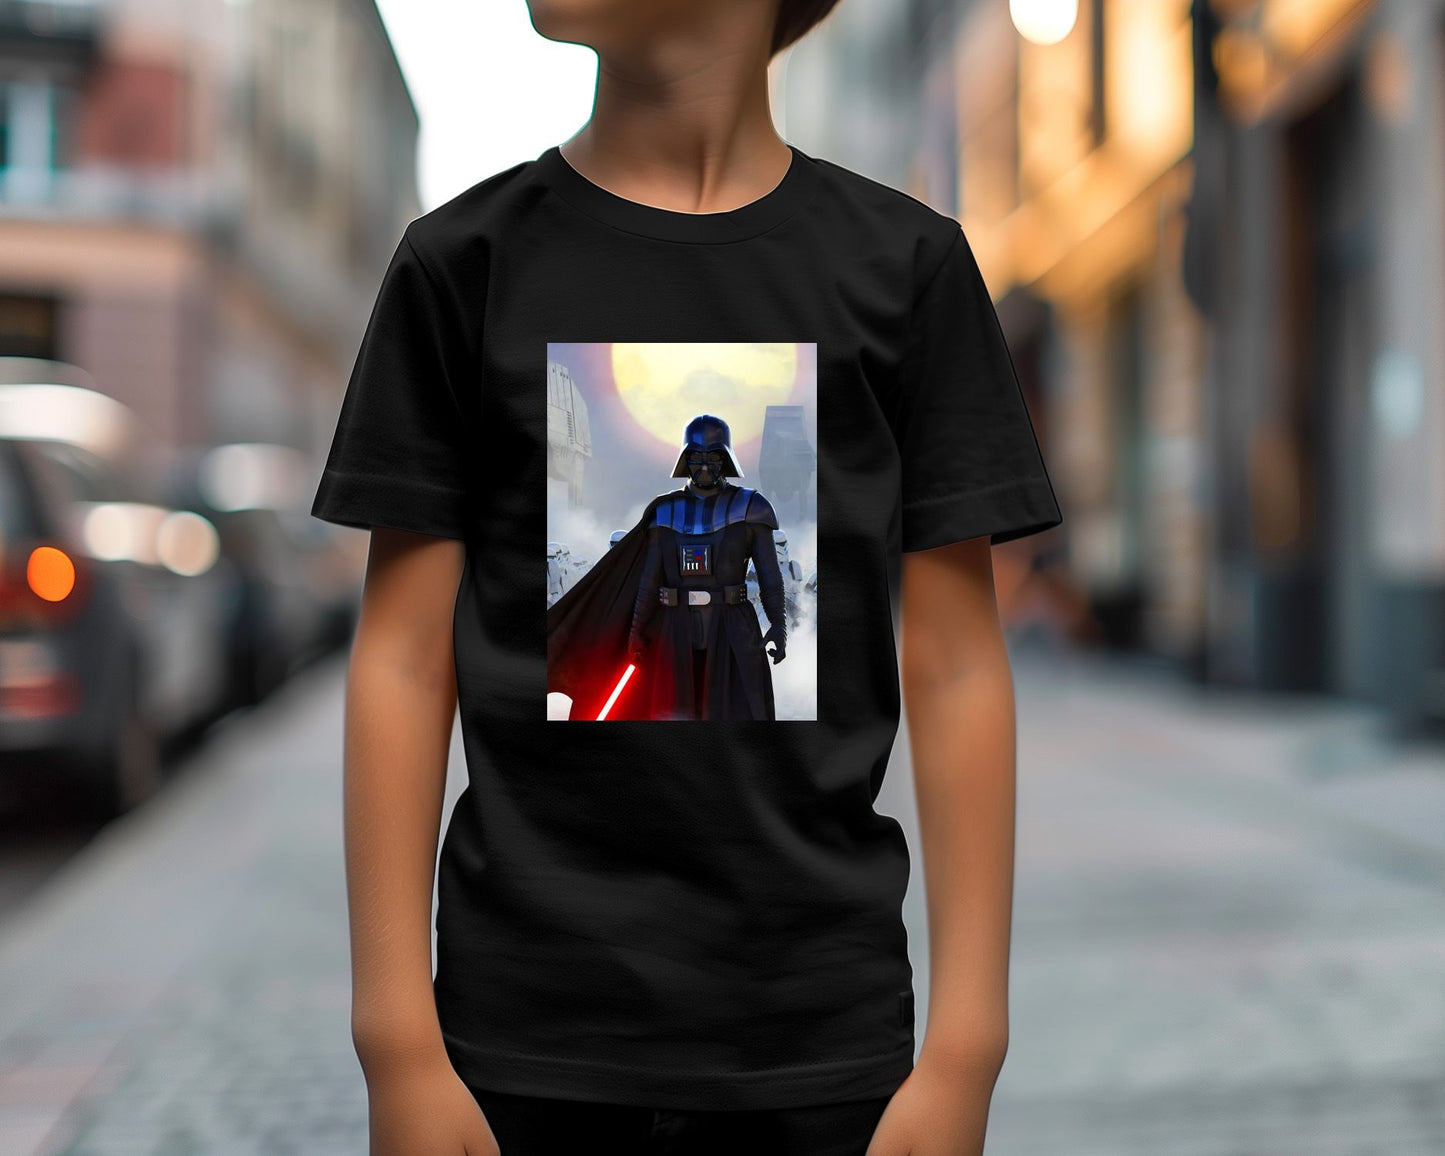 Darth Vader 9 - @LightCreative